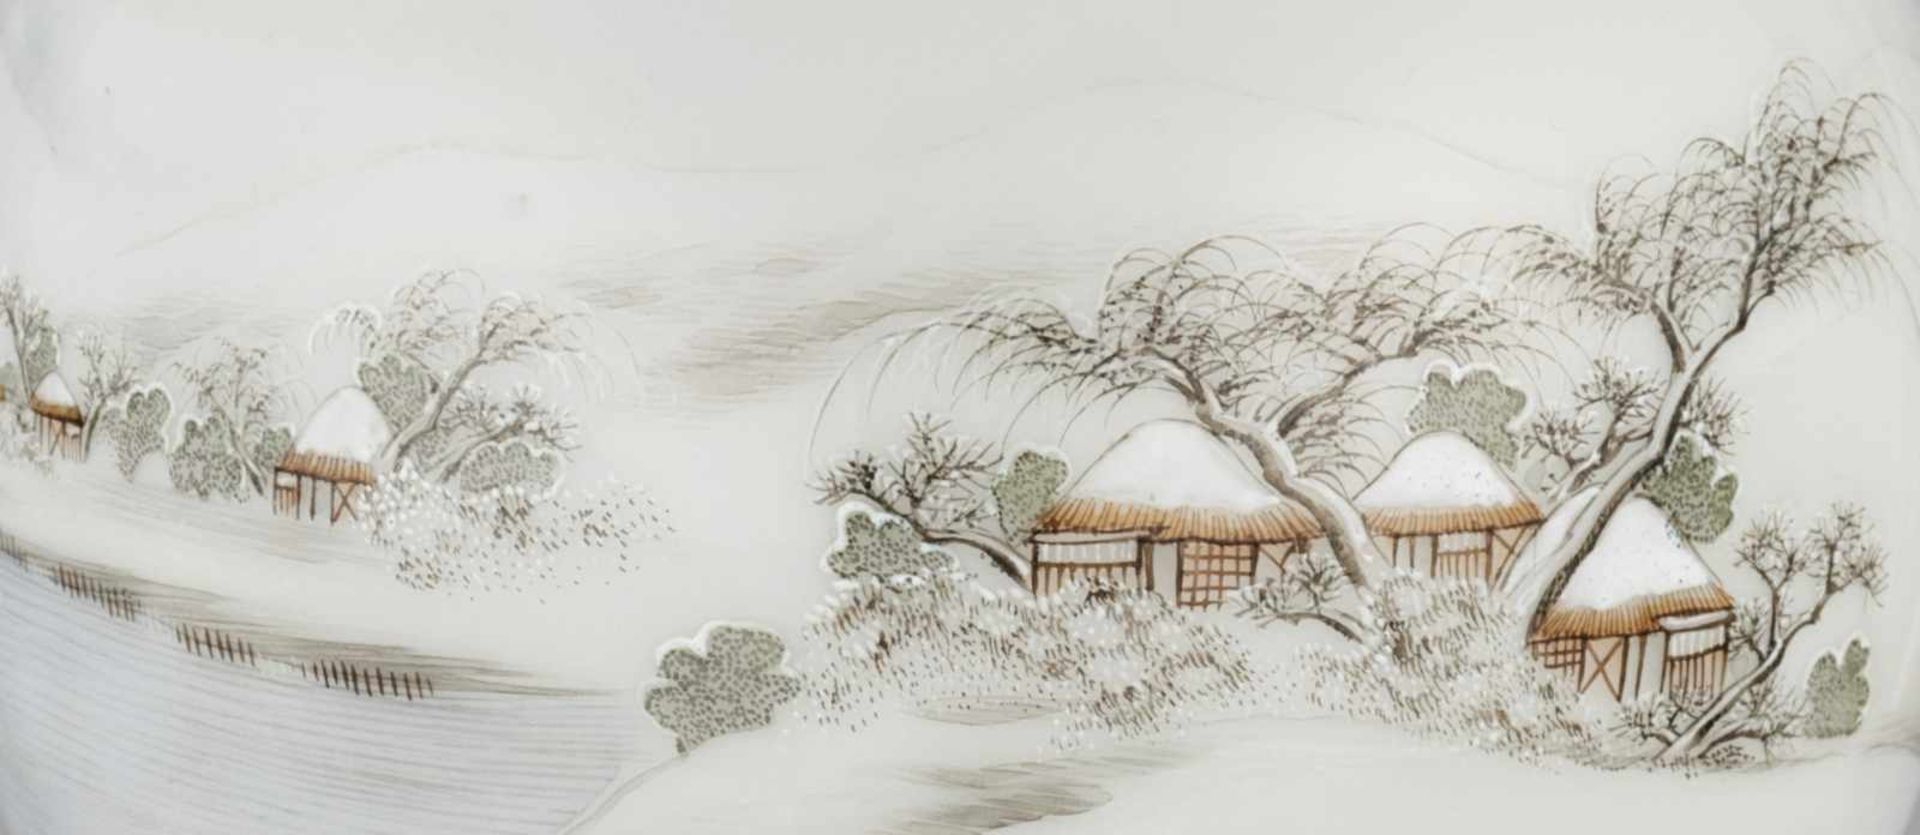 IMURA STUDIO: A WINTER LANDSCAPE PORCELAIN VASE By the Imura studio, signed Dai Nihon Imura zoJapan, - Bild 2 aus 12